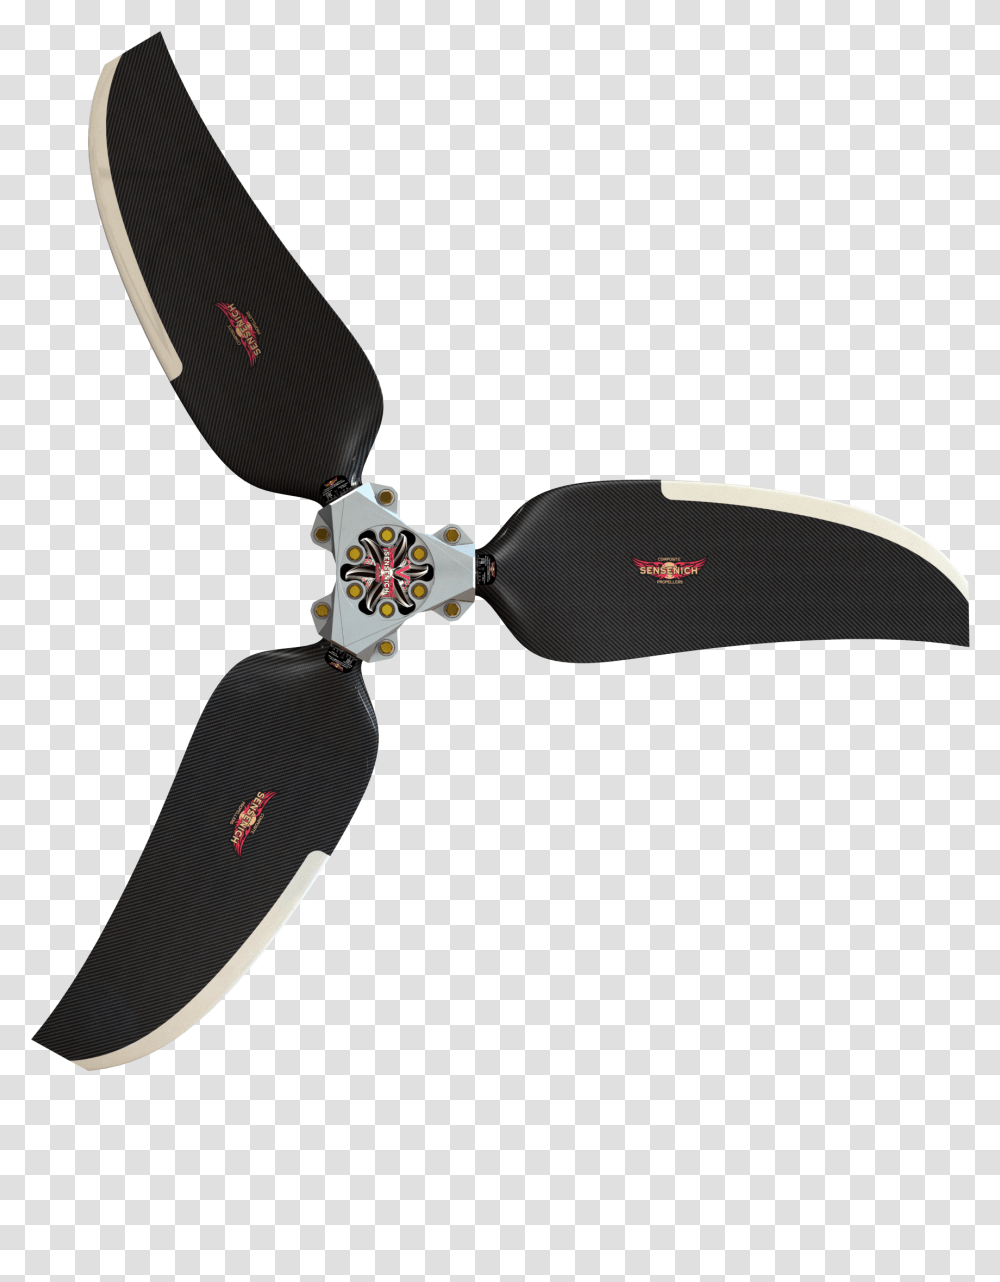 Jw Series Propeller Image Propeller Blade, Machine, Appliance, Ceiling Fan Transparent Png